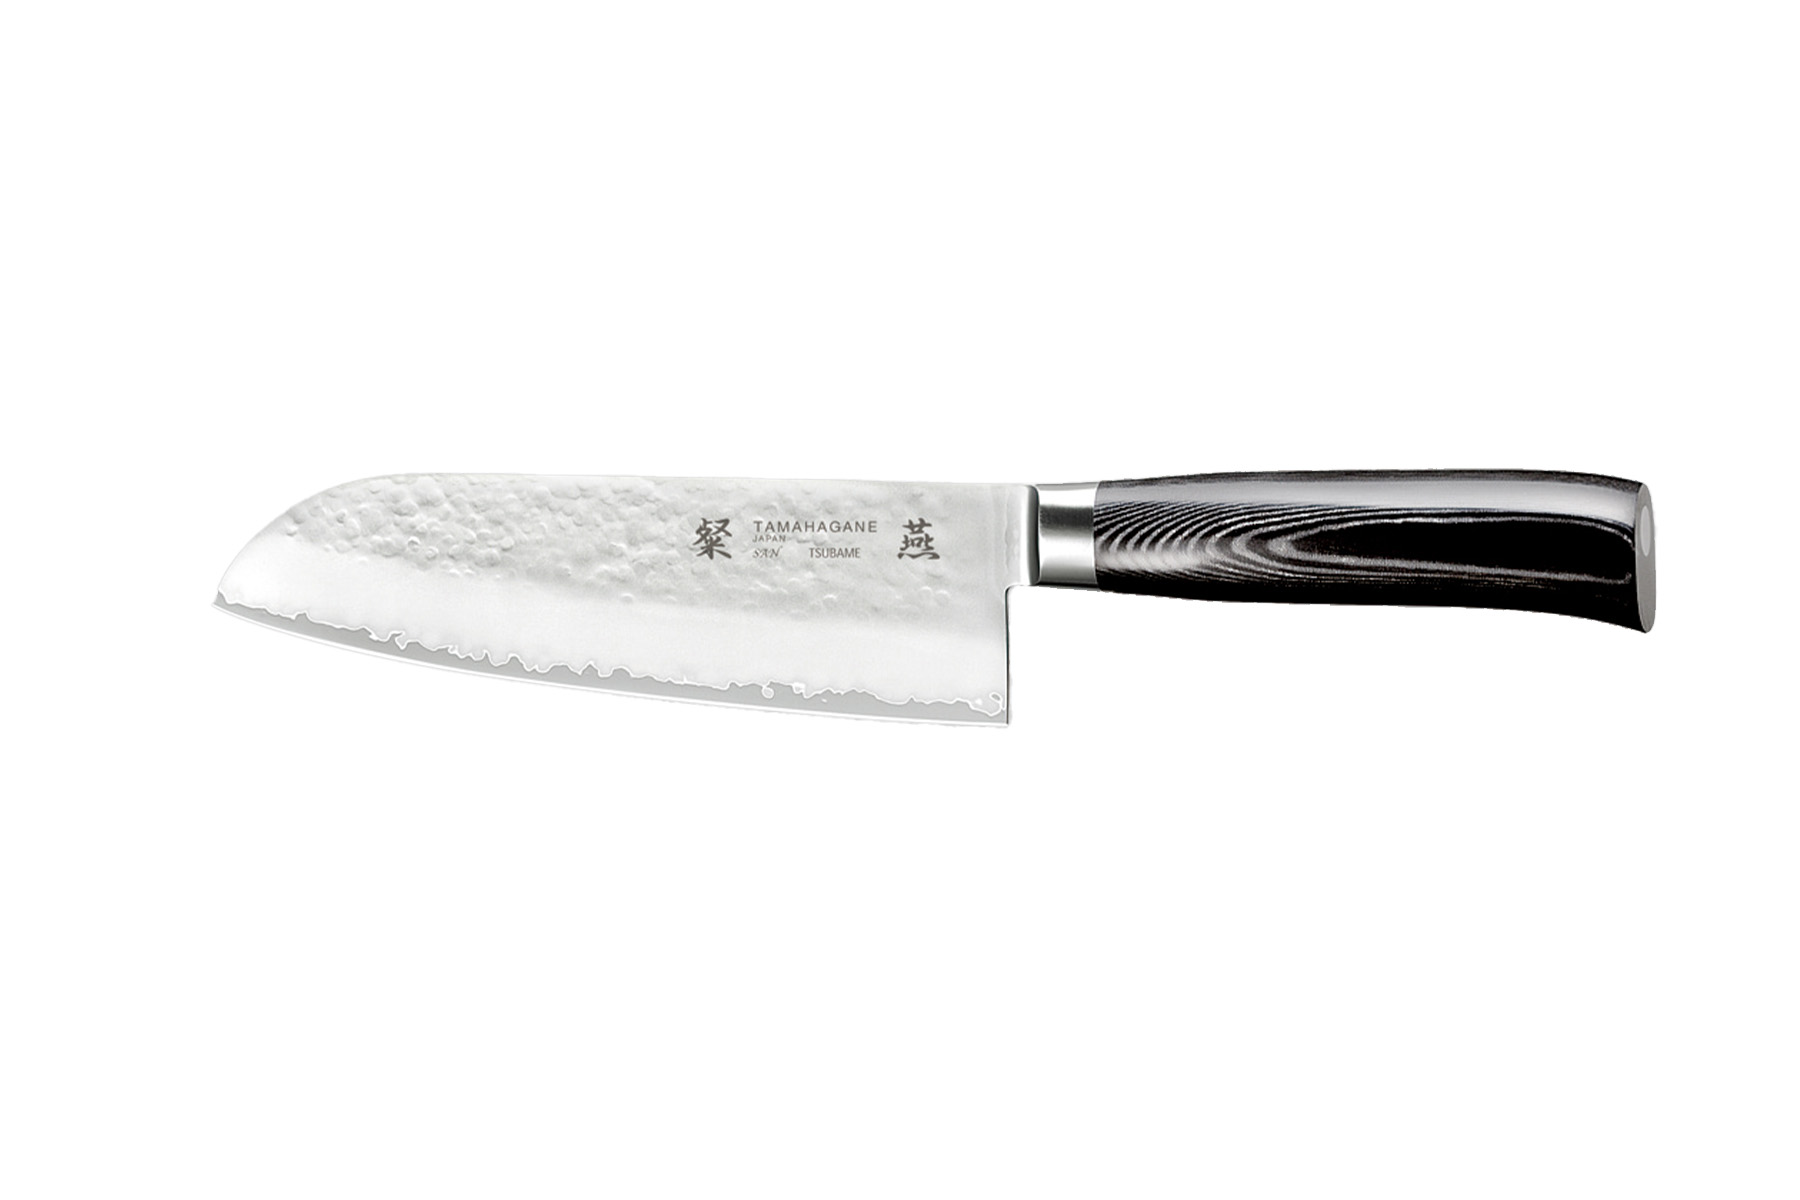 Couteau japonais Tamahagane Tsubame Hammered - Couteau santoku 17,5 cm